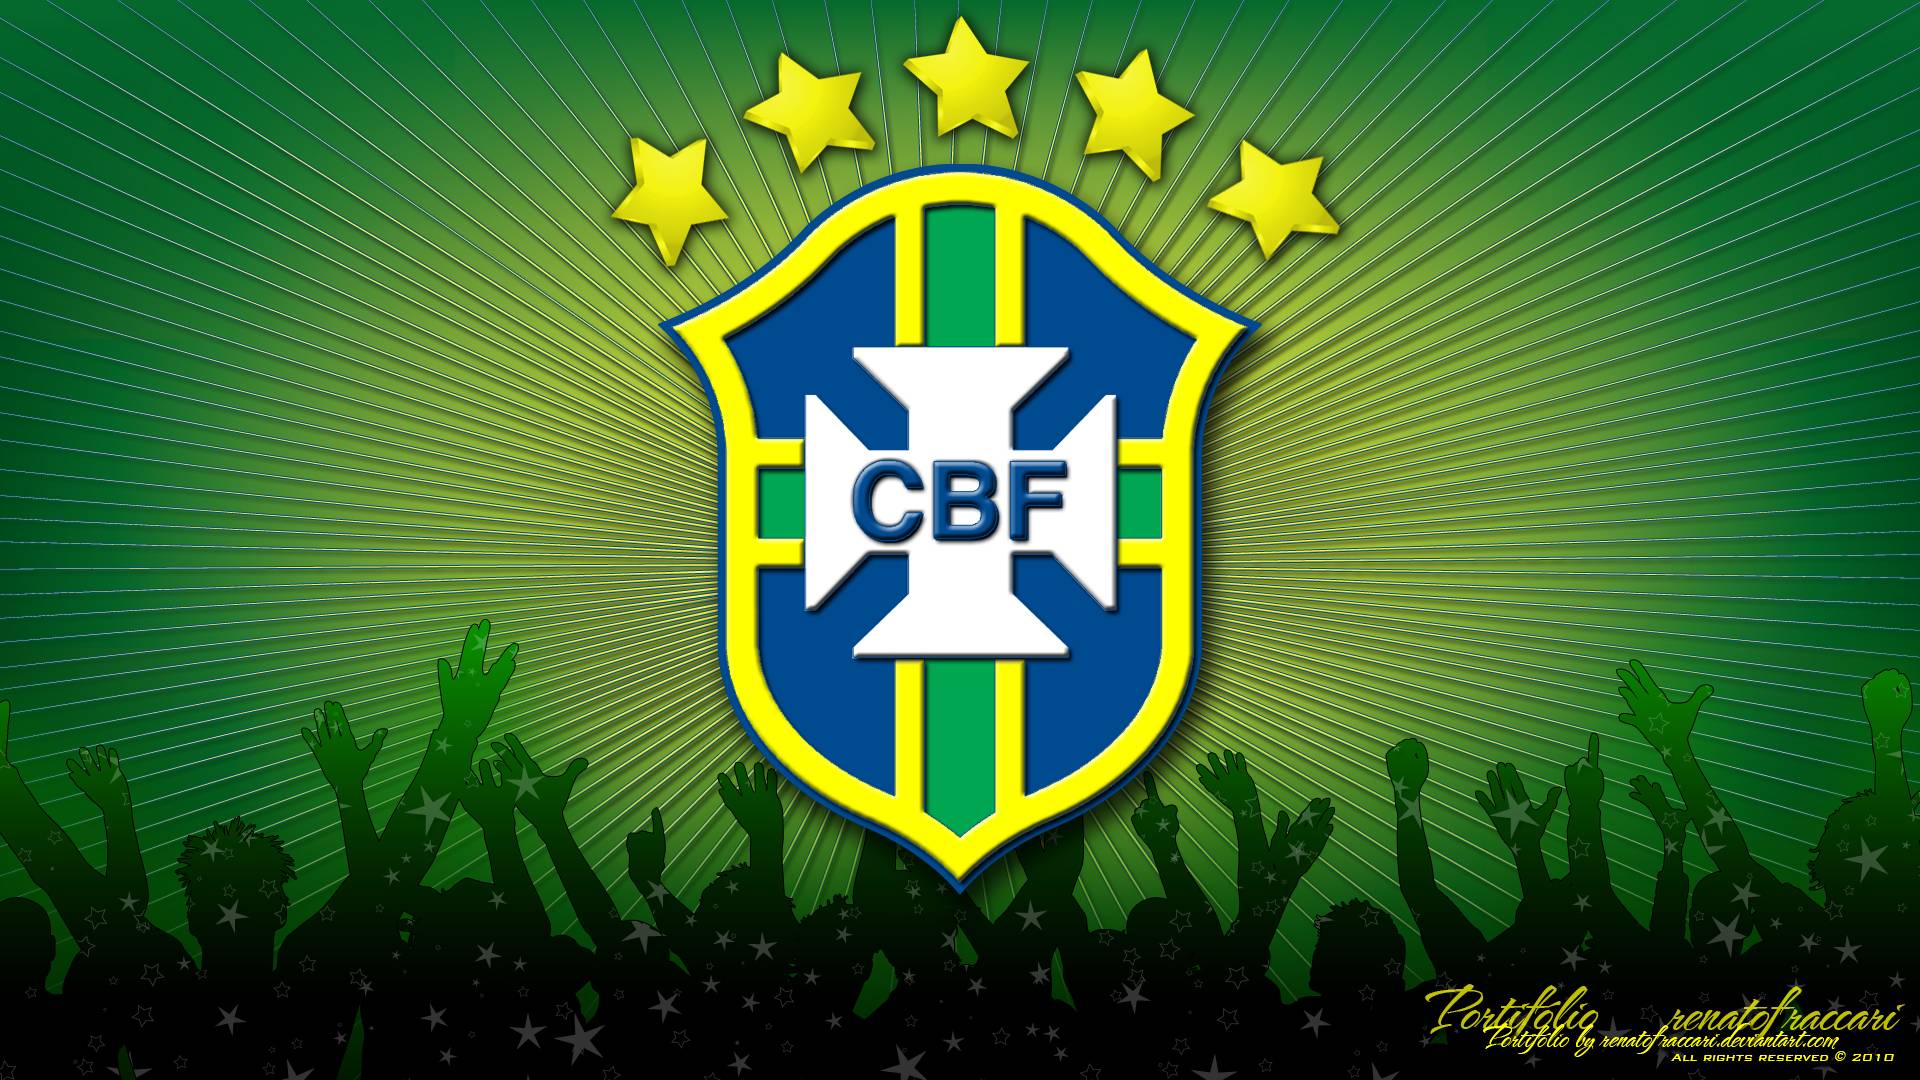 Brazil football team desktop wallpaper in best resolutions